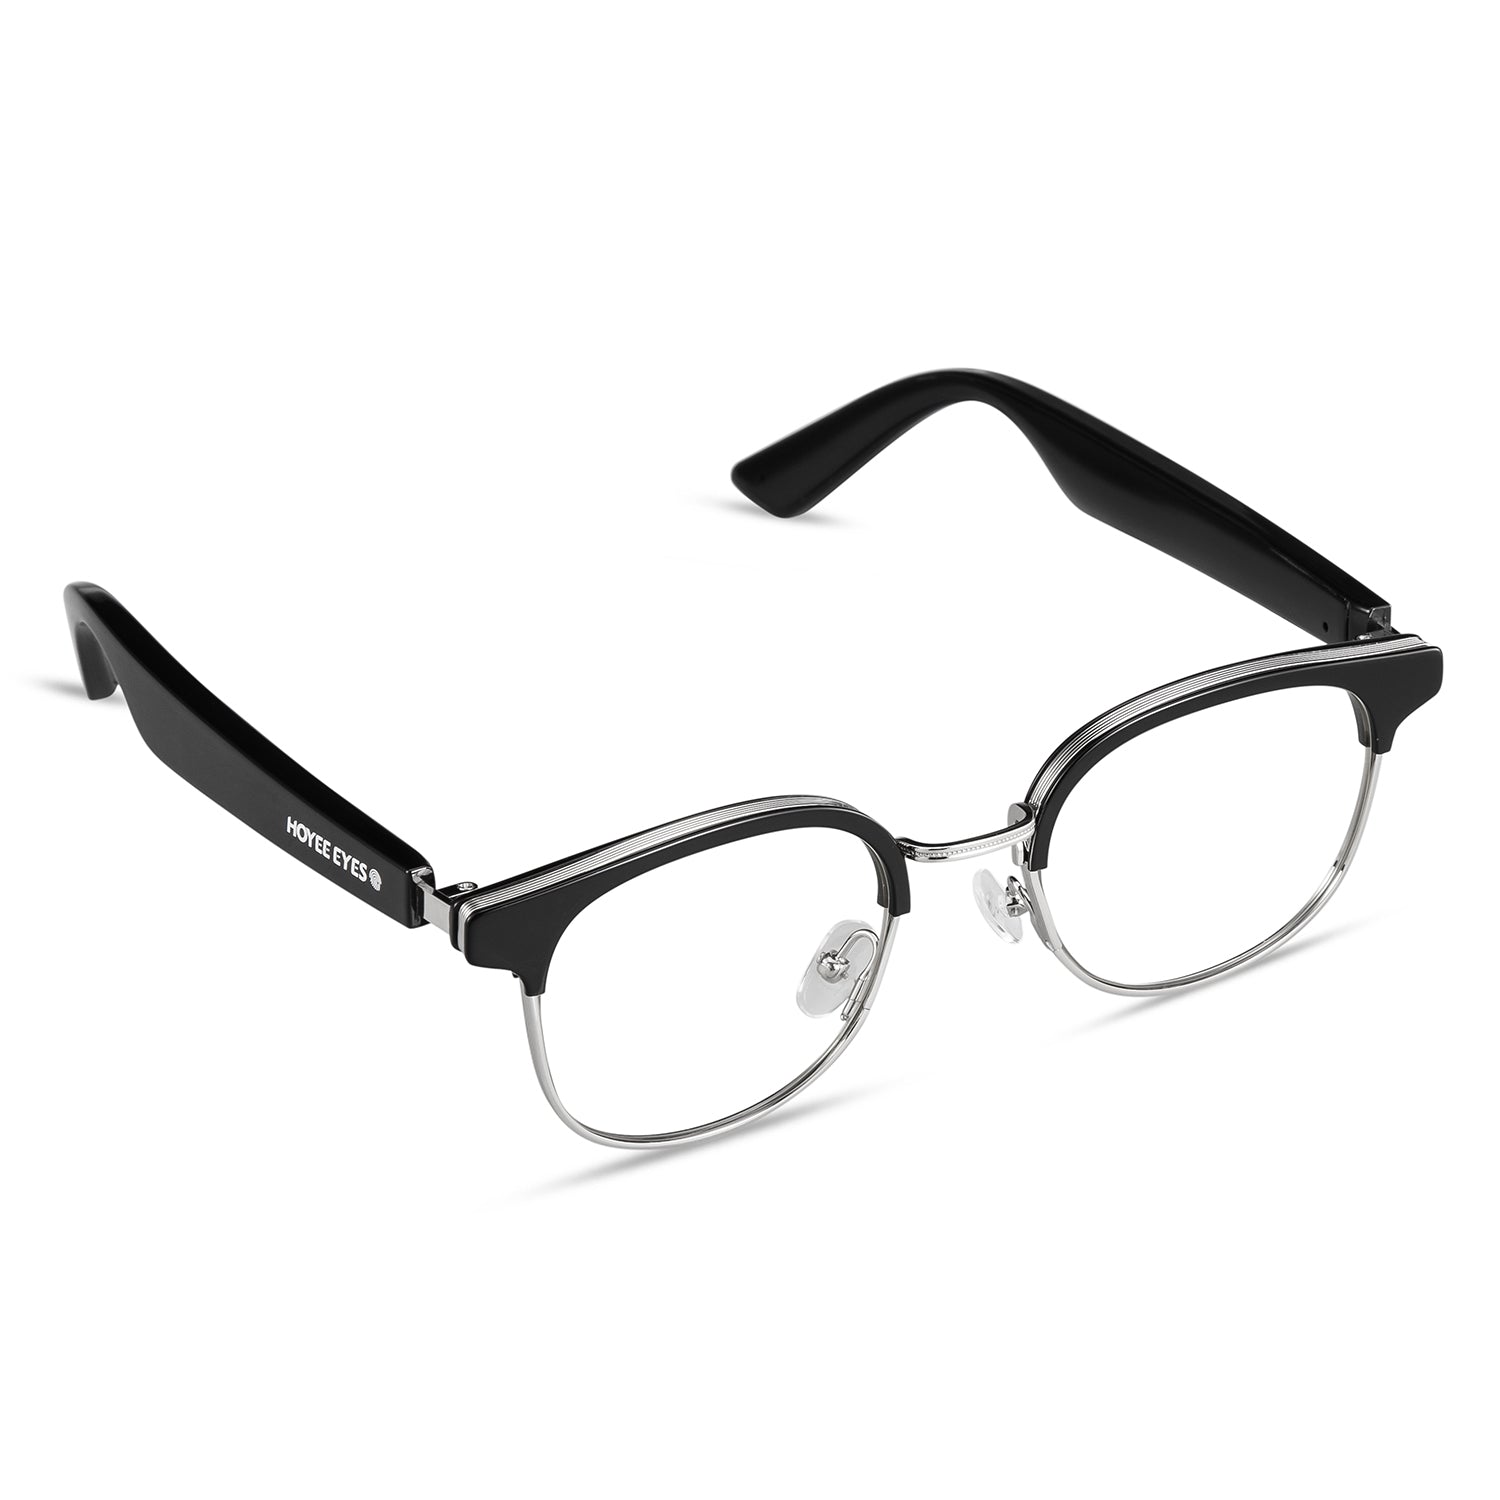 Smart Bluetooth Audio Eyeglasses, Open-Ear Glasses Headset With Noise  Canceling Microphones, Blue Light Blocking Lenses, Silver Browline Unisex  Frame